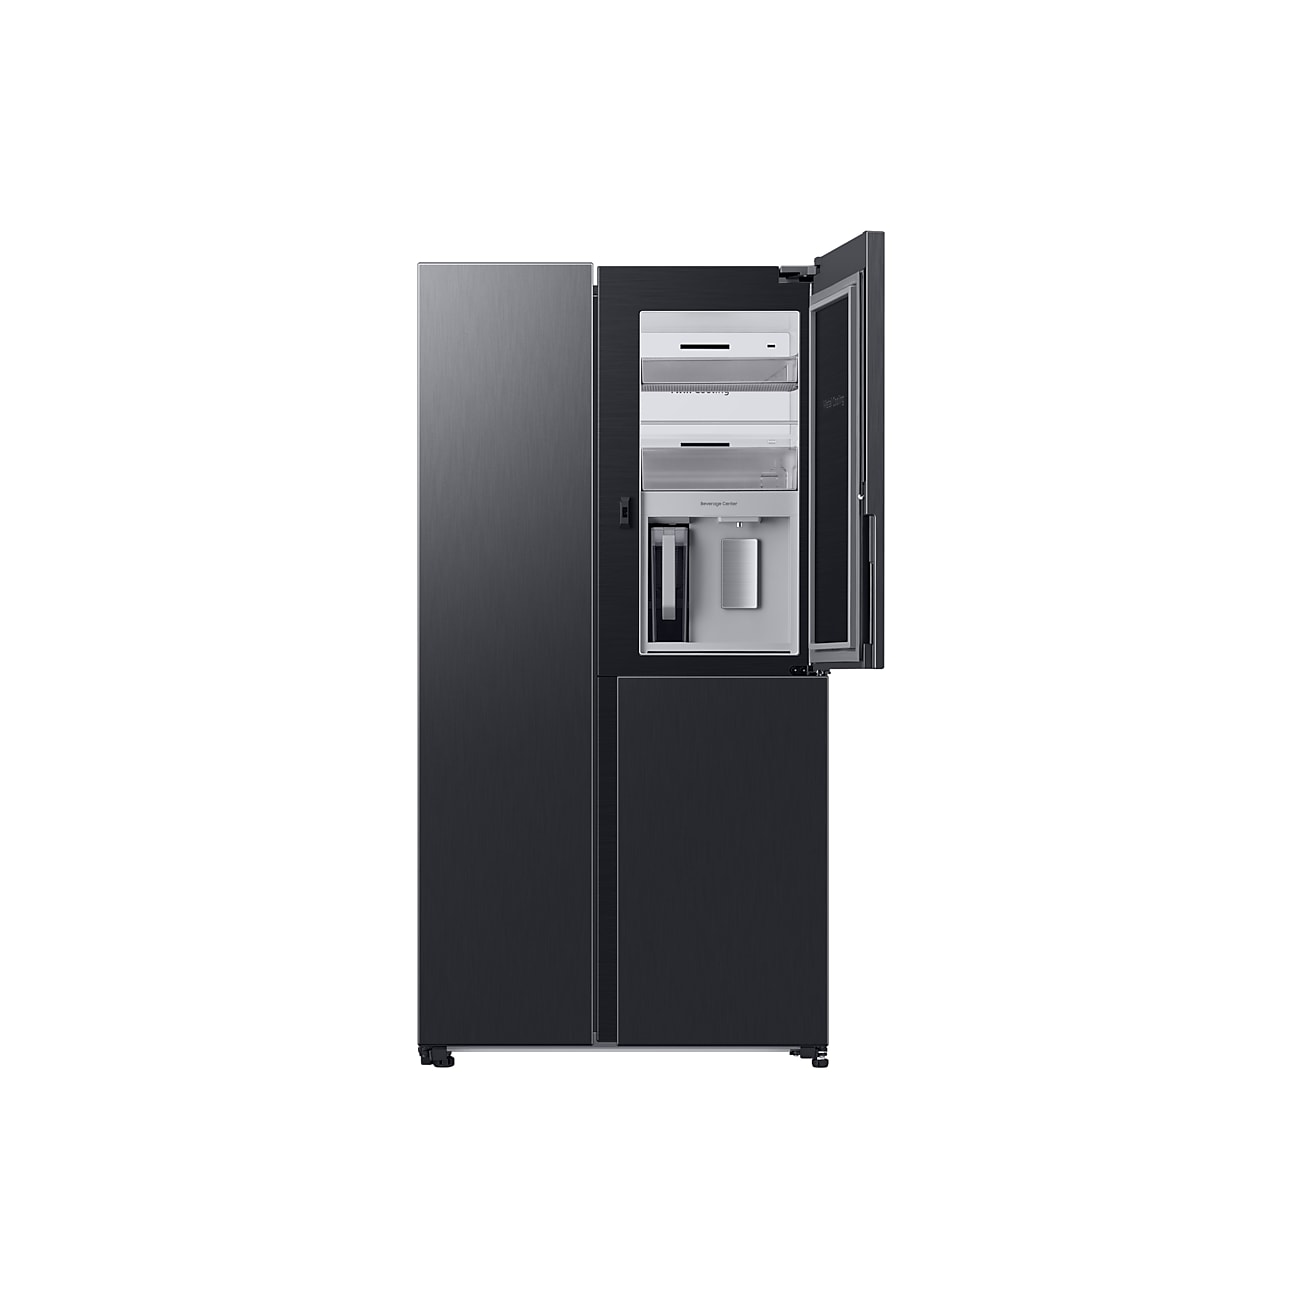 Samsung RS8000 9 Series American Fridge Freezer with Beverage Center™ in Black